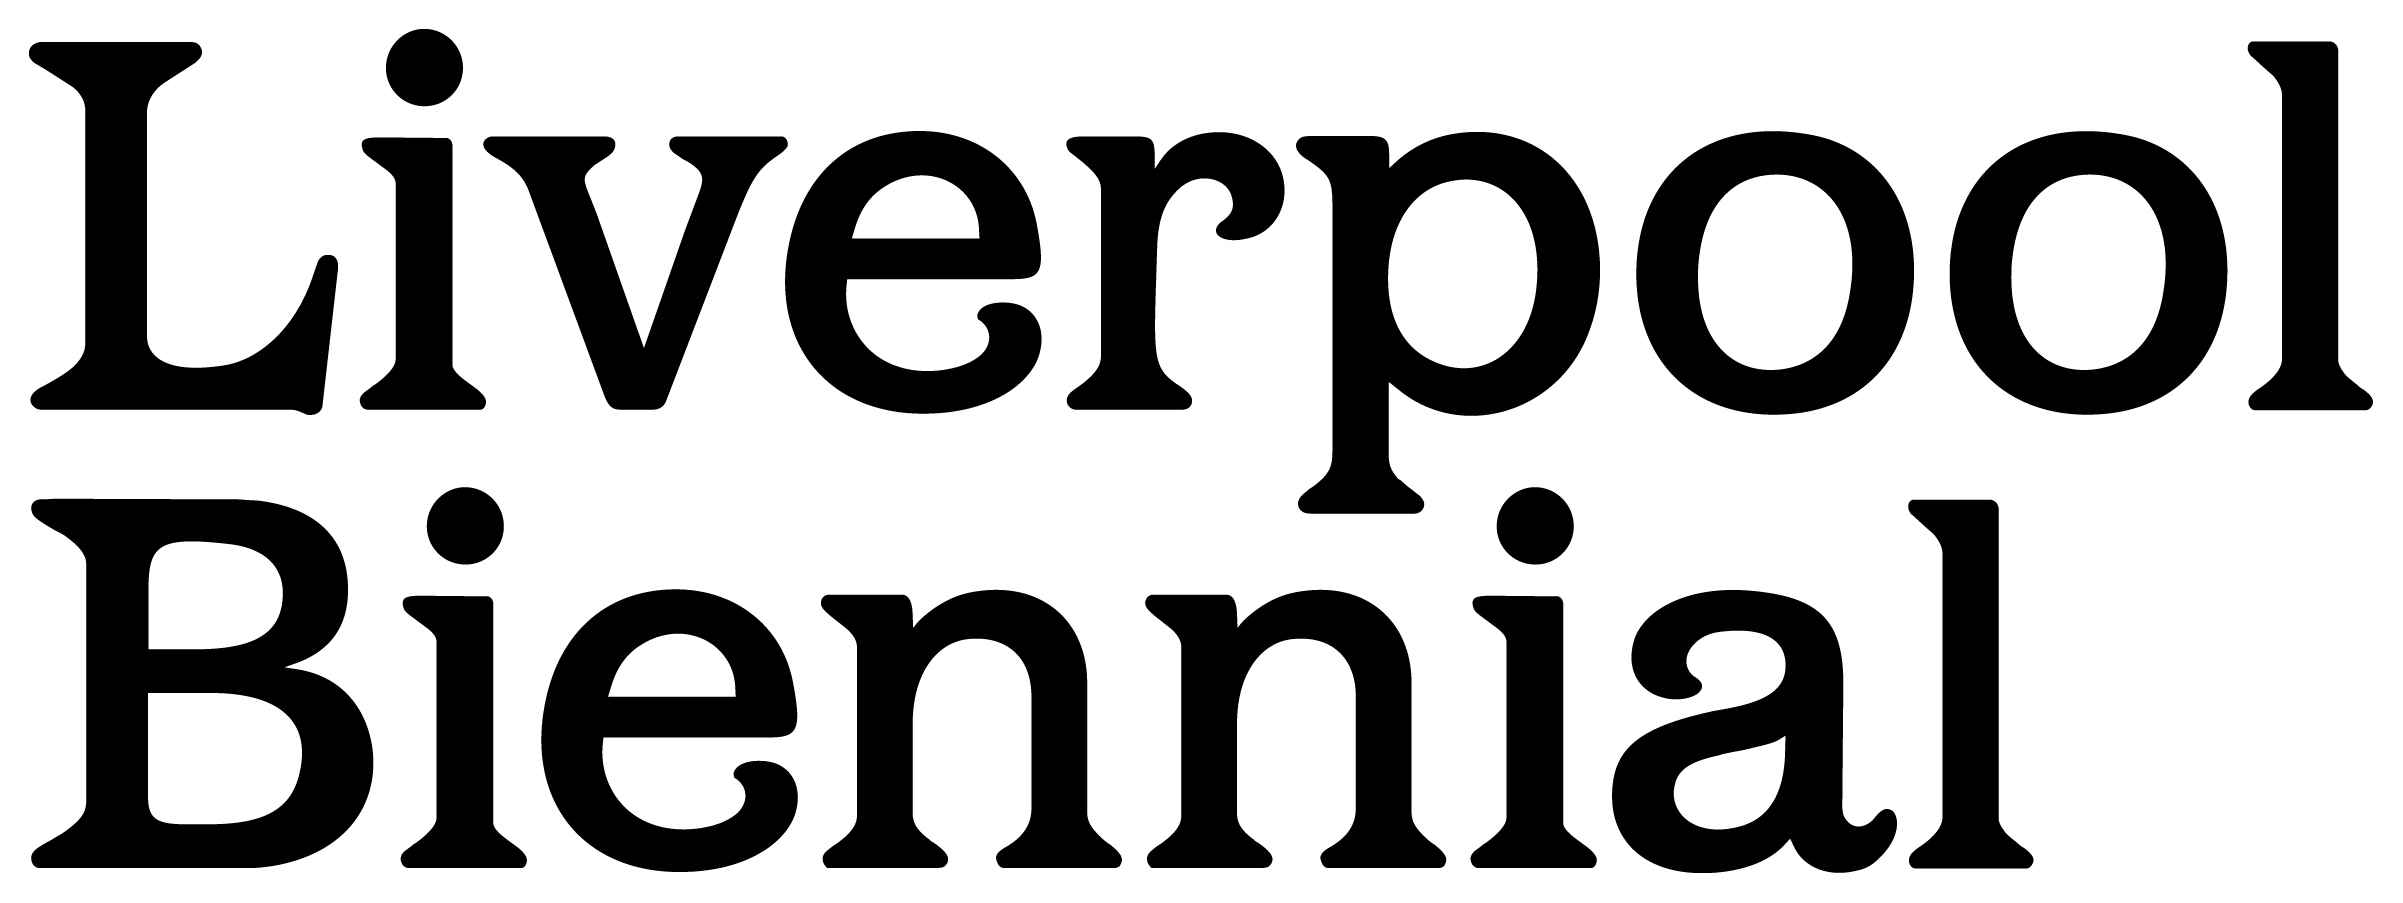 Liverpool Biennial.jpg